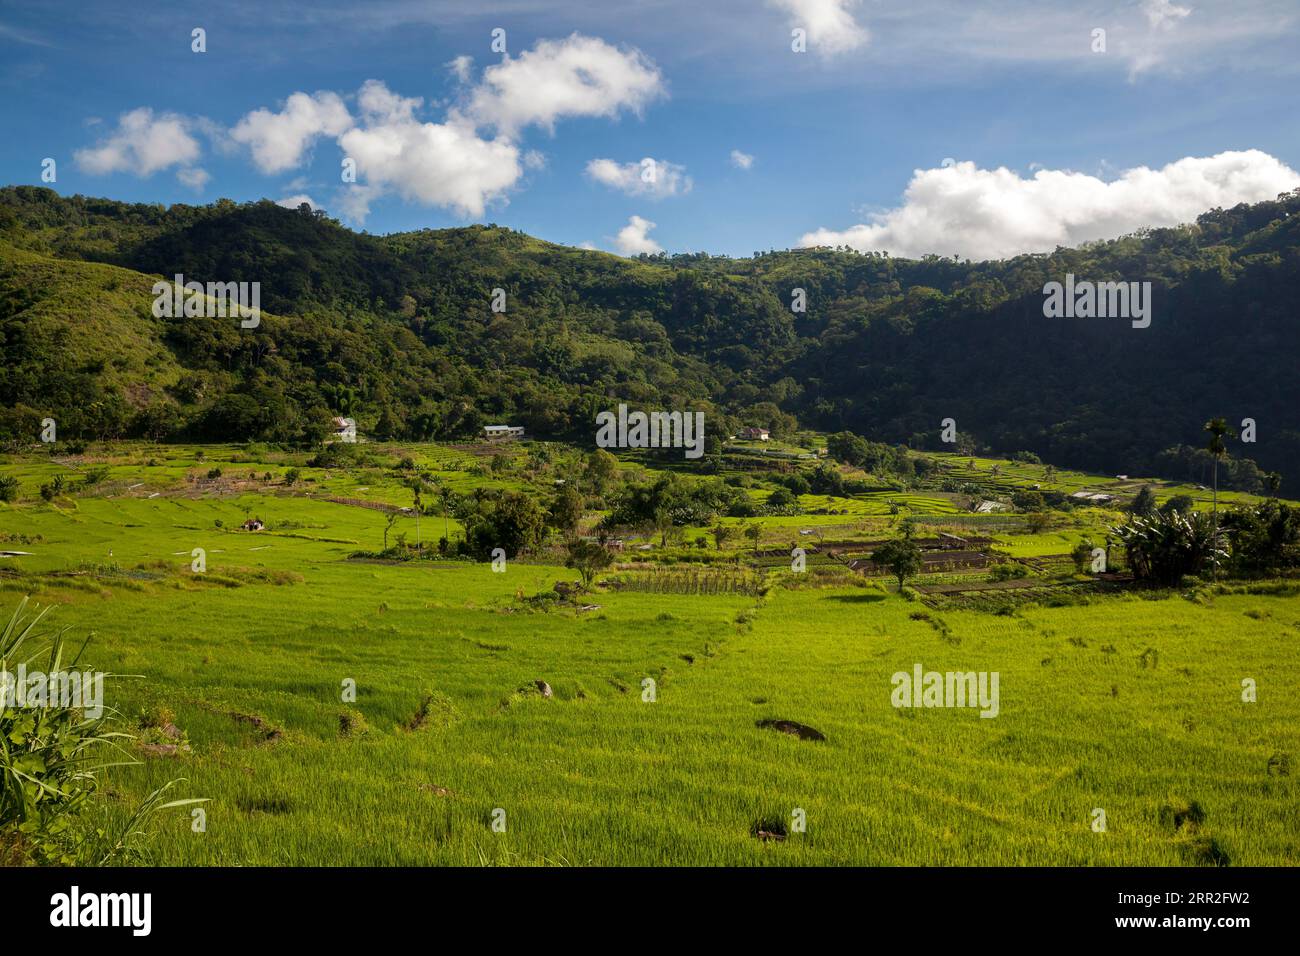 Rice Fields and Mountains, Moni, Flores, Nusa Tenggara Timur, Indonesia Stock Photo